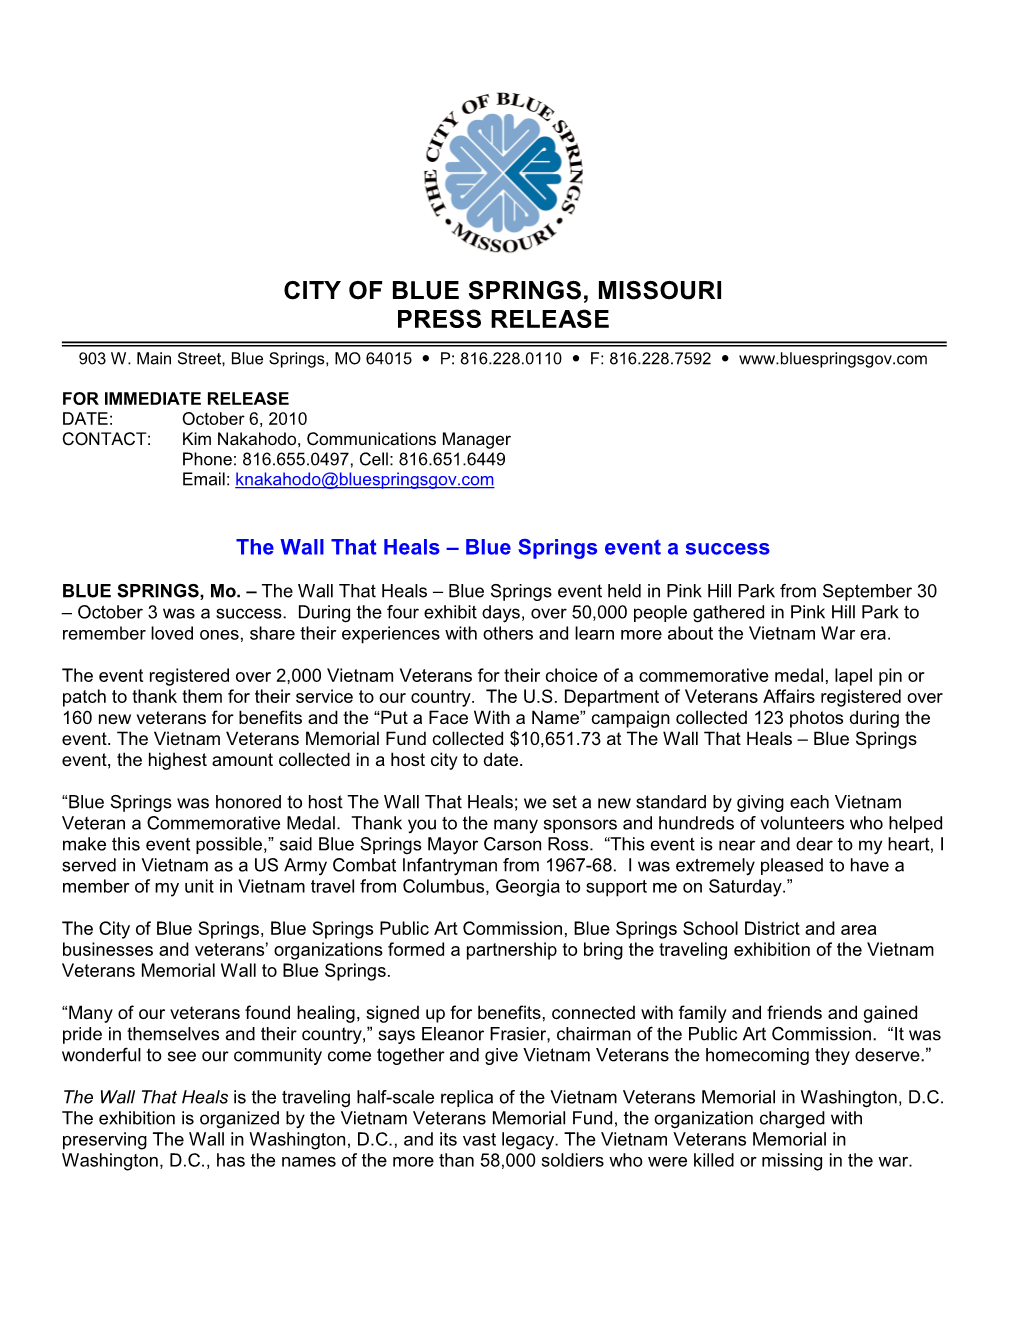 City of Blue Springs, Missouri Press Release